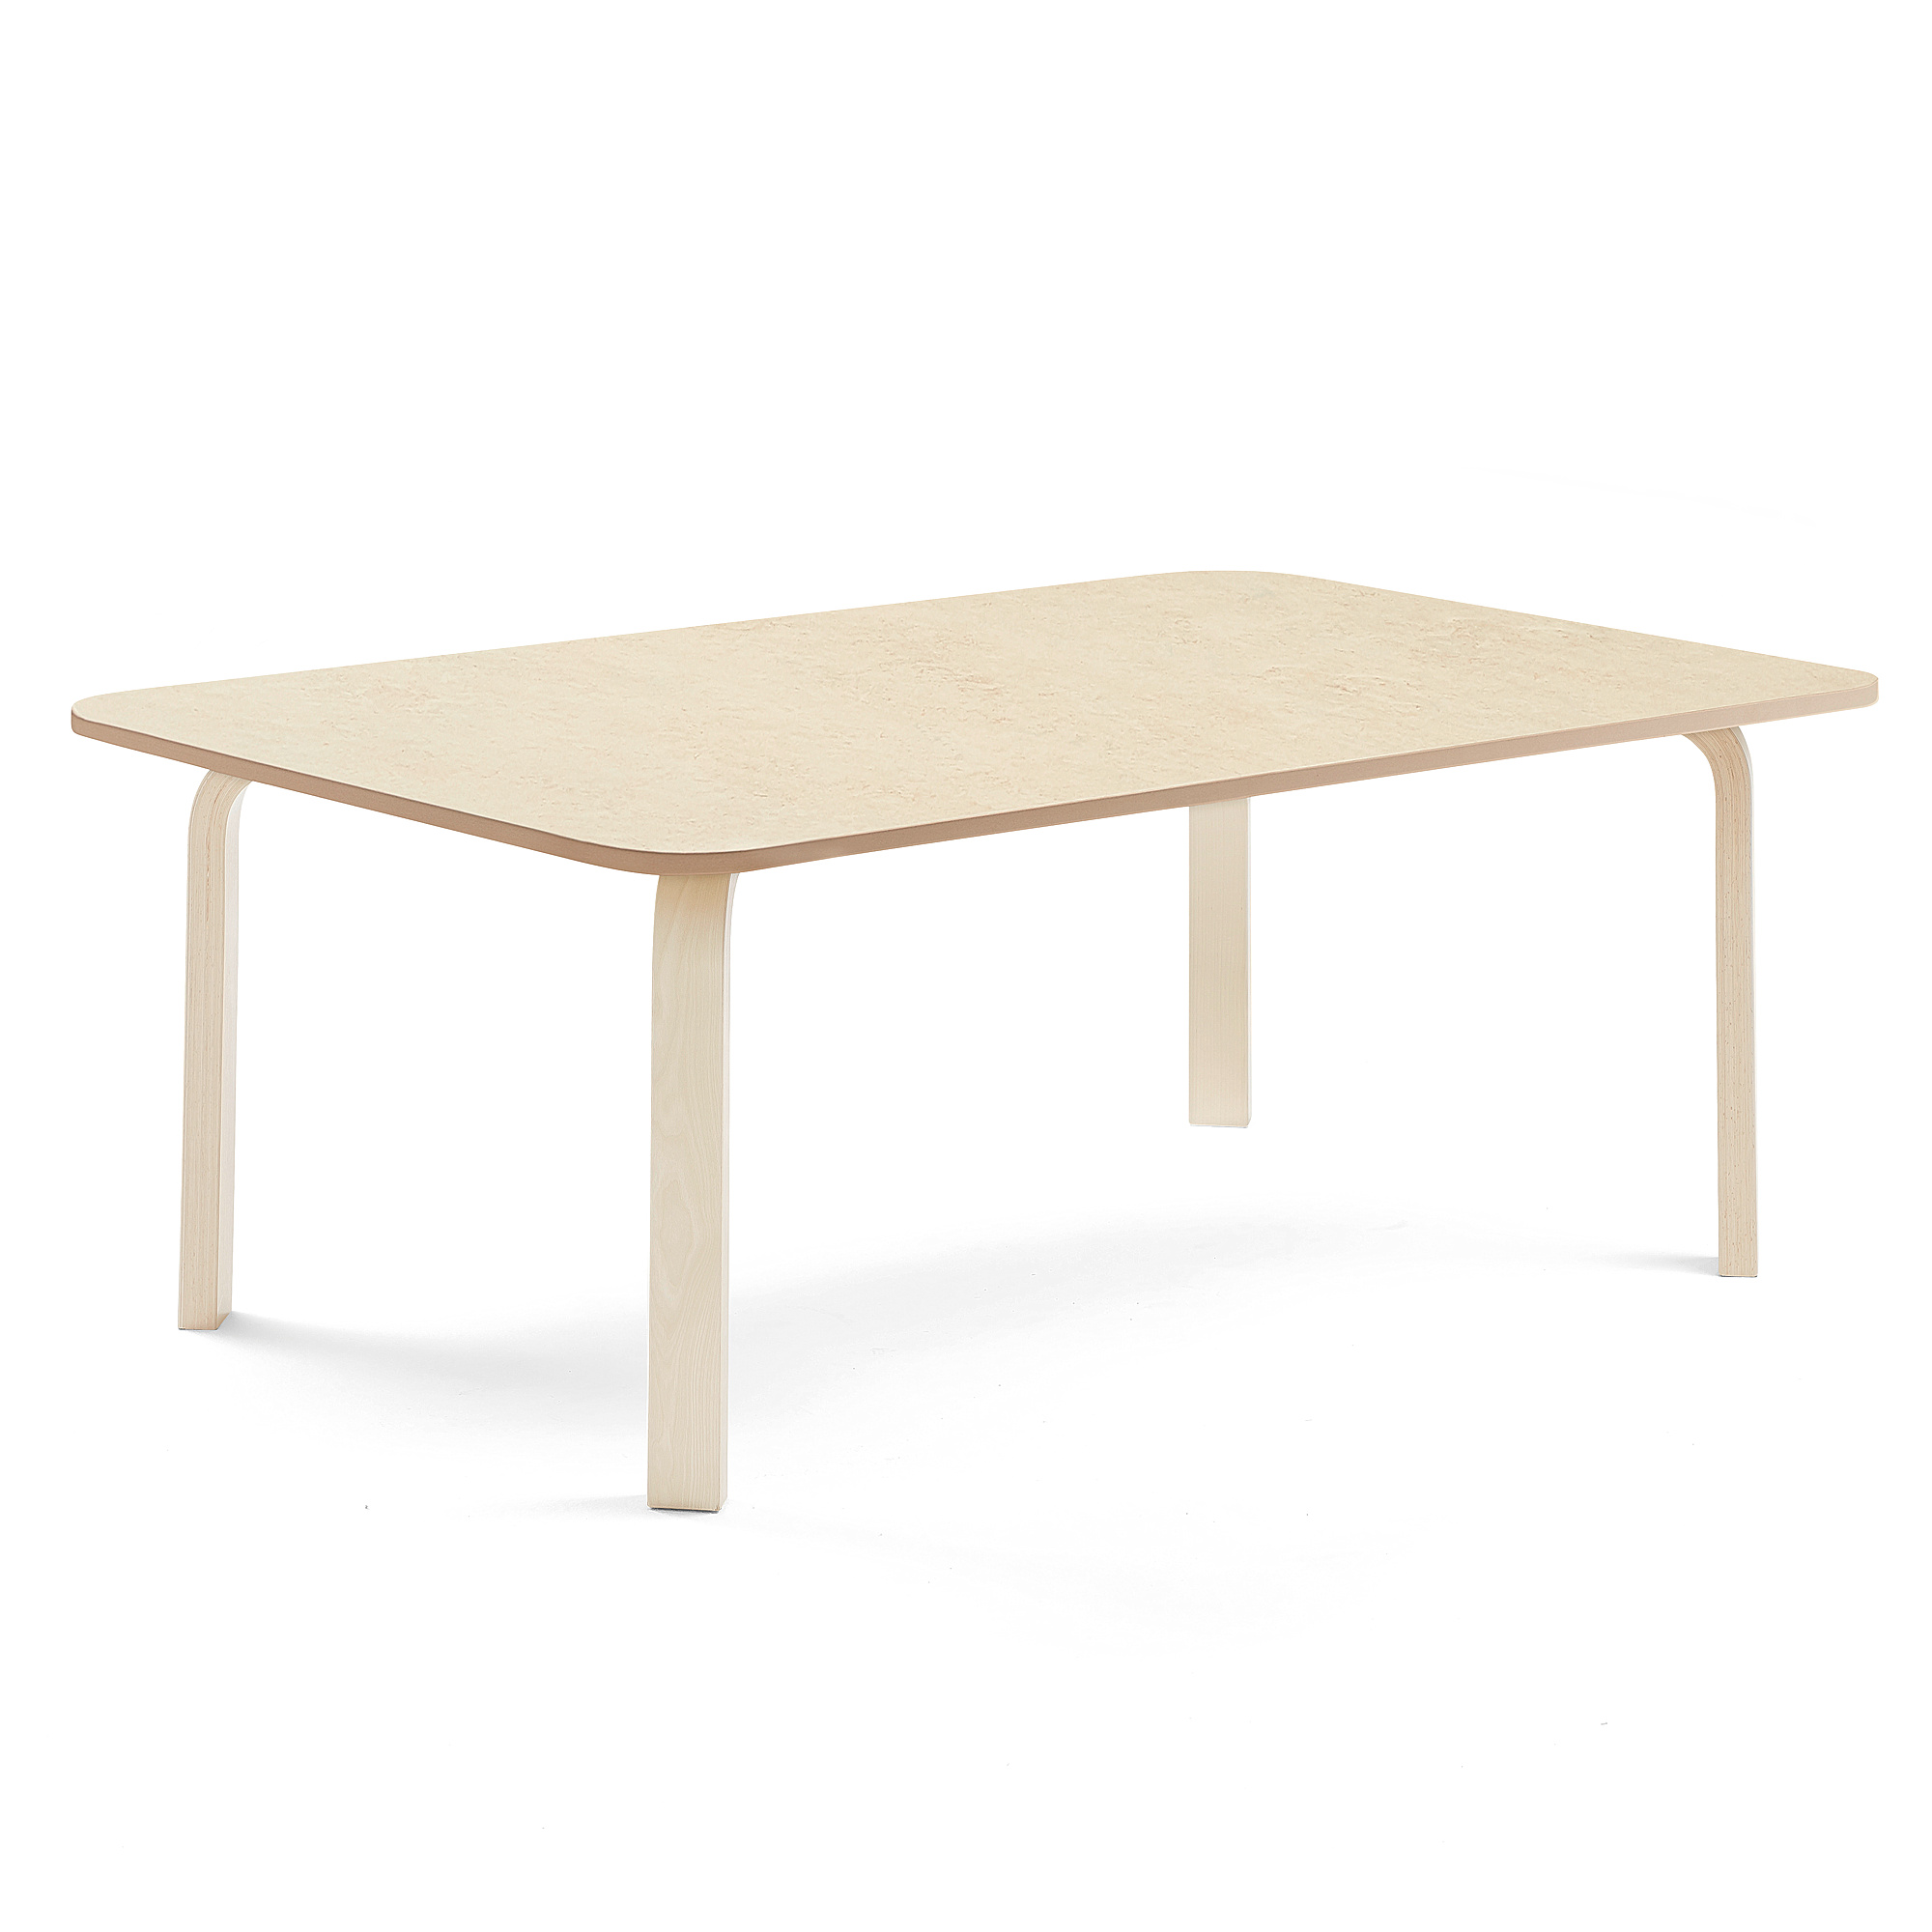 Stůl ELTON, 1800x800x530 mm, bříza, akustické linoleum, béžová